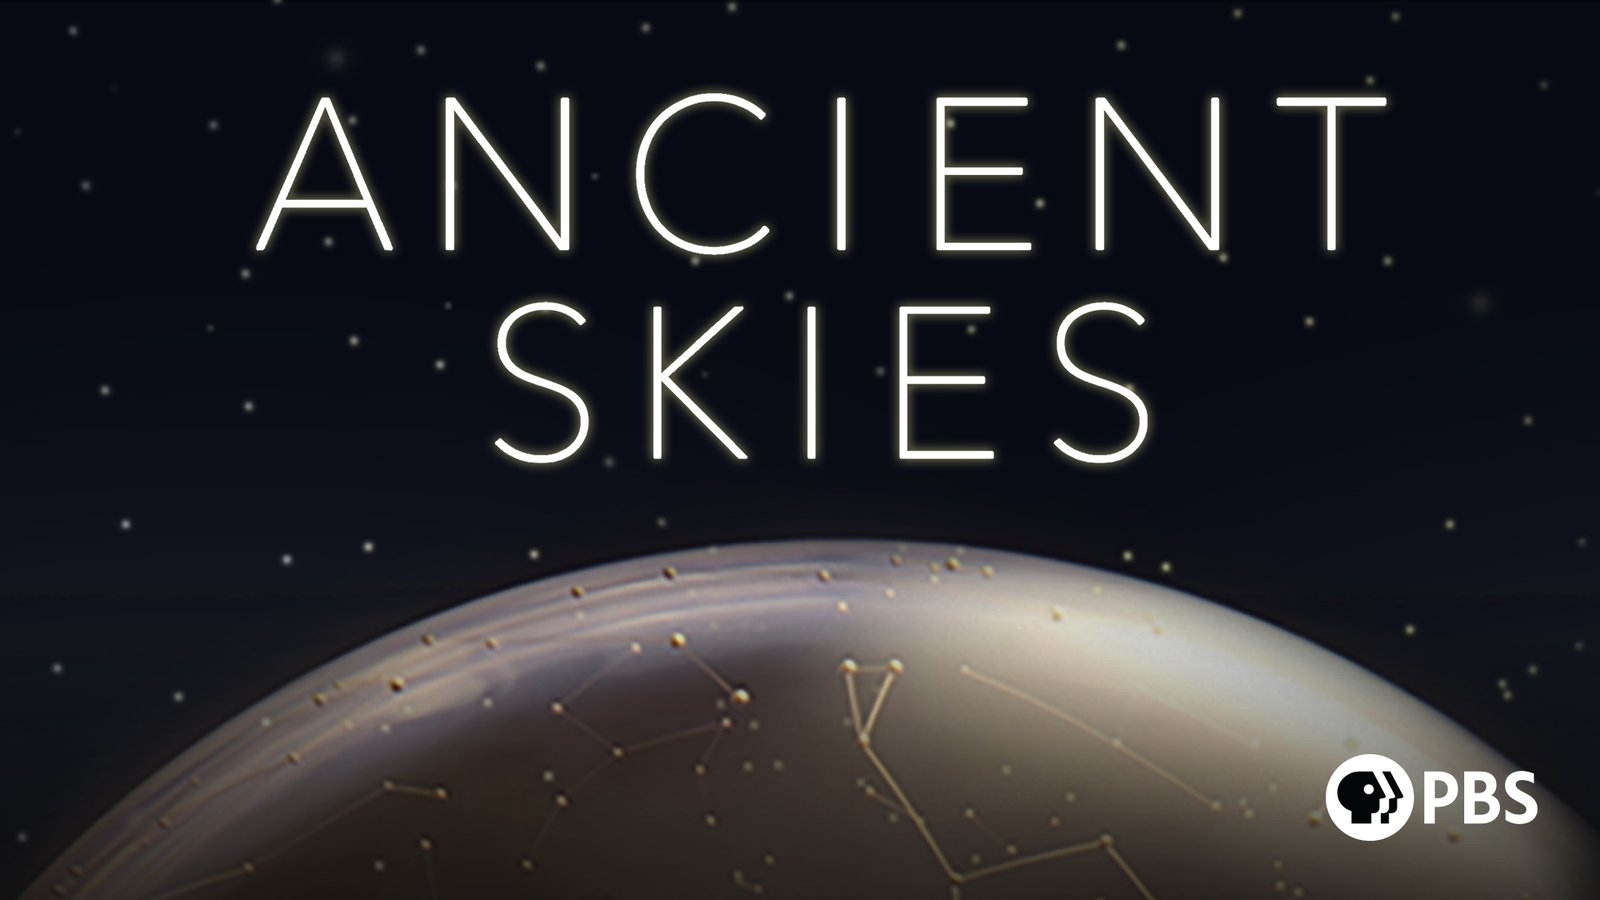 Ancient Skies - Season 1